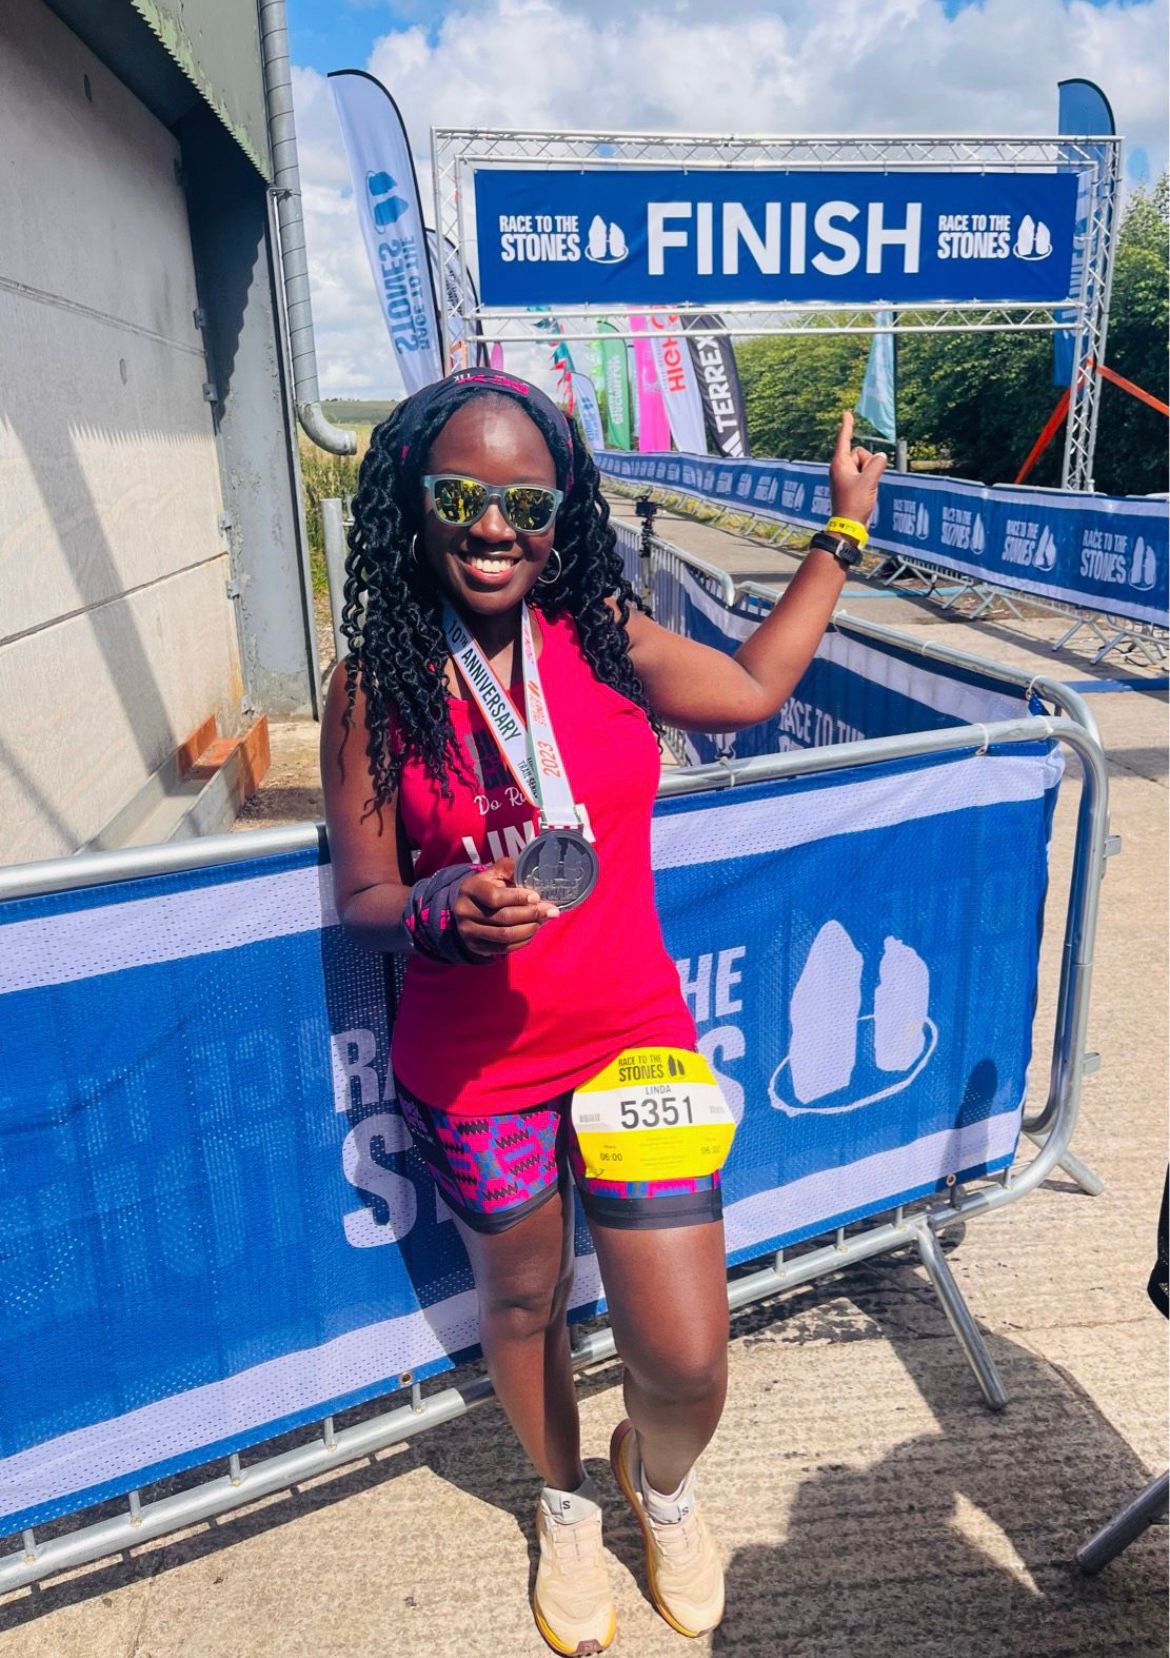 Linda from Black girls do run at finish line 